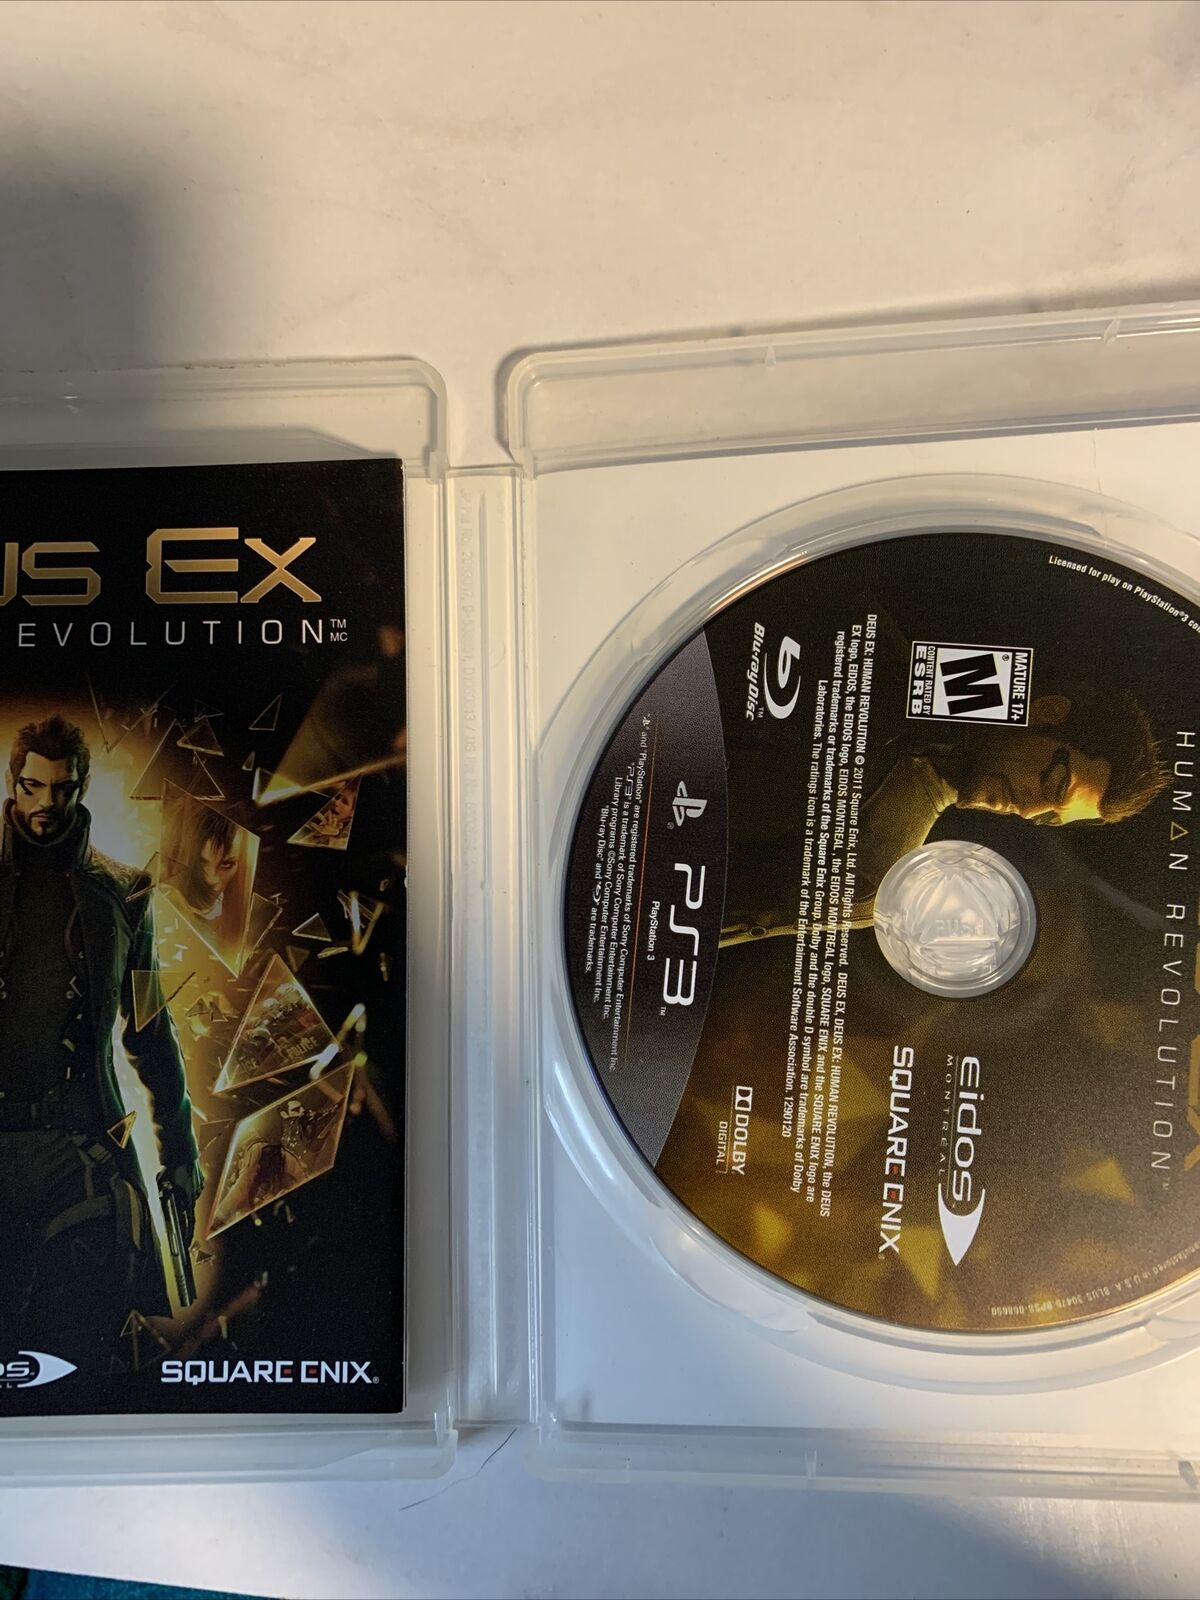 Deus Ex: Human Revolution (Sony PlayStation 3, 2011)